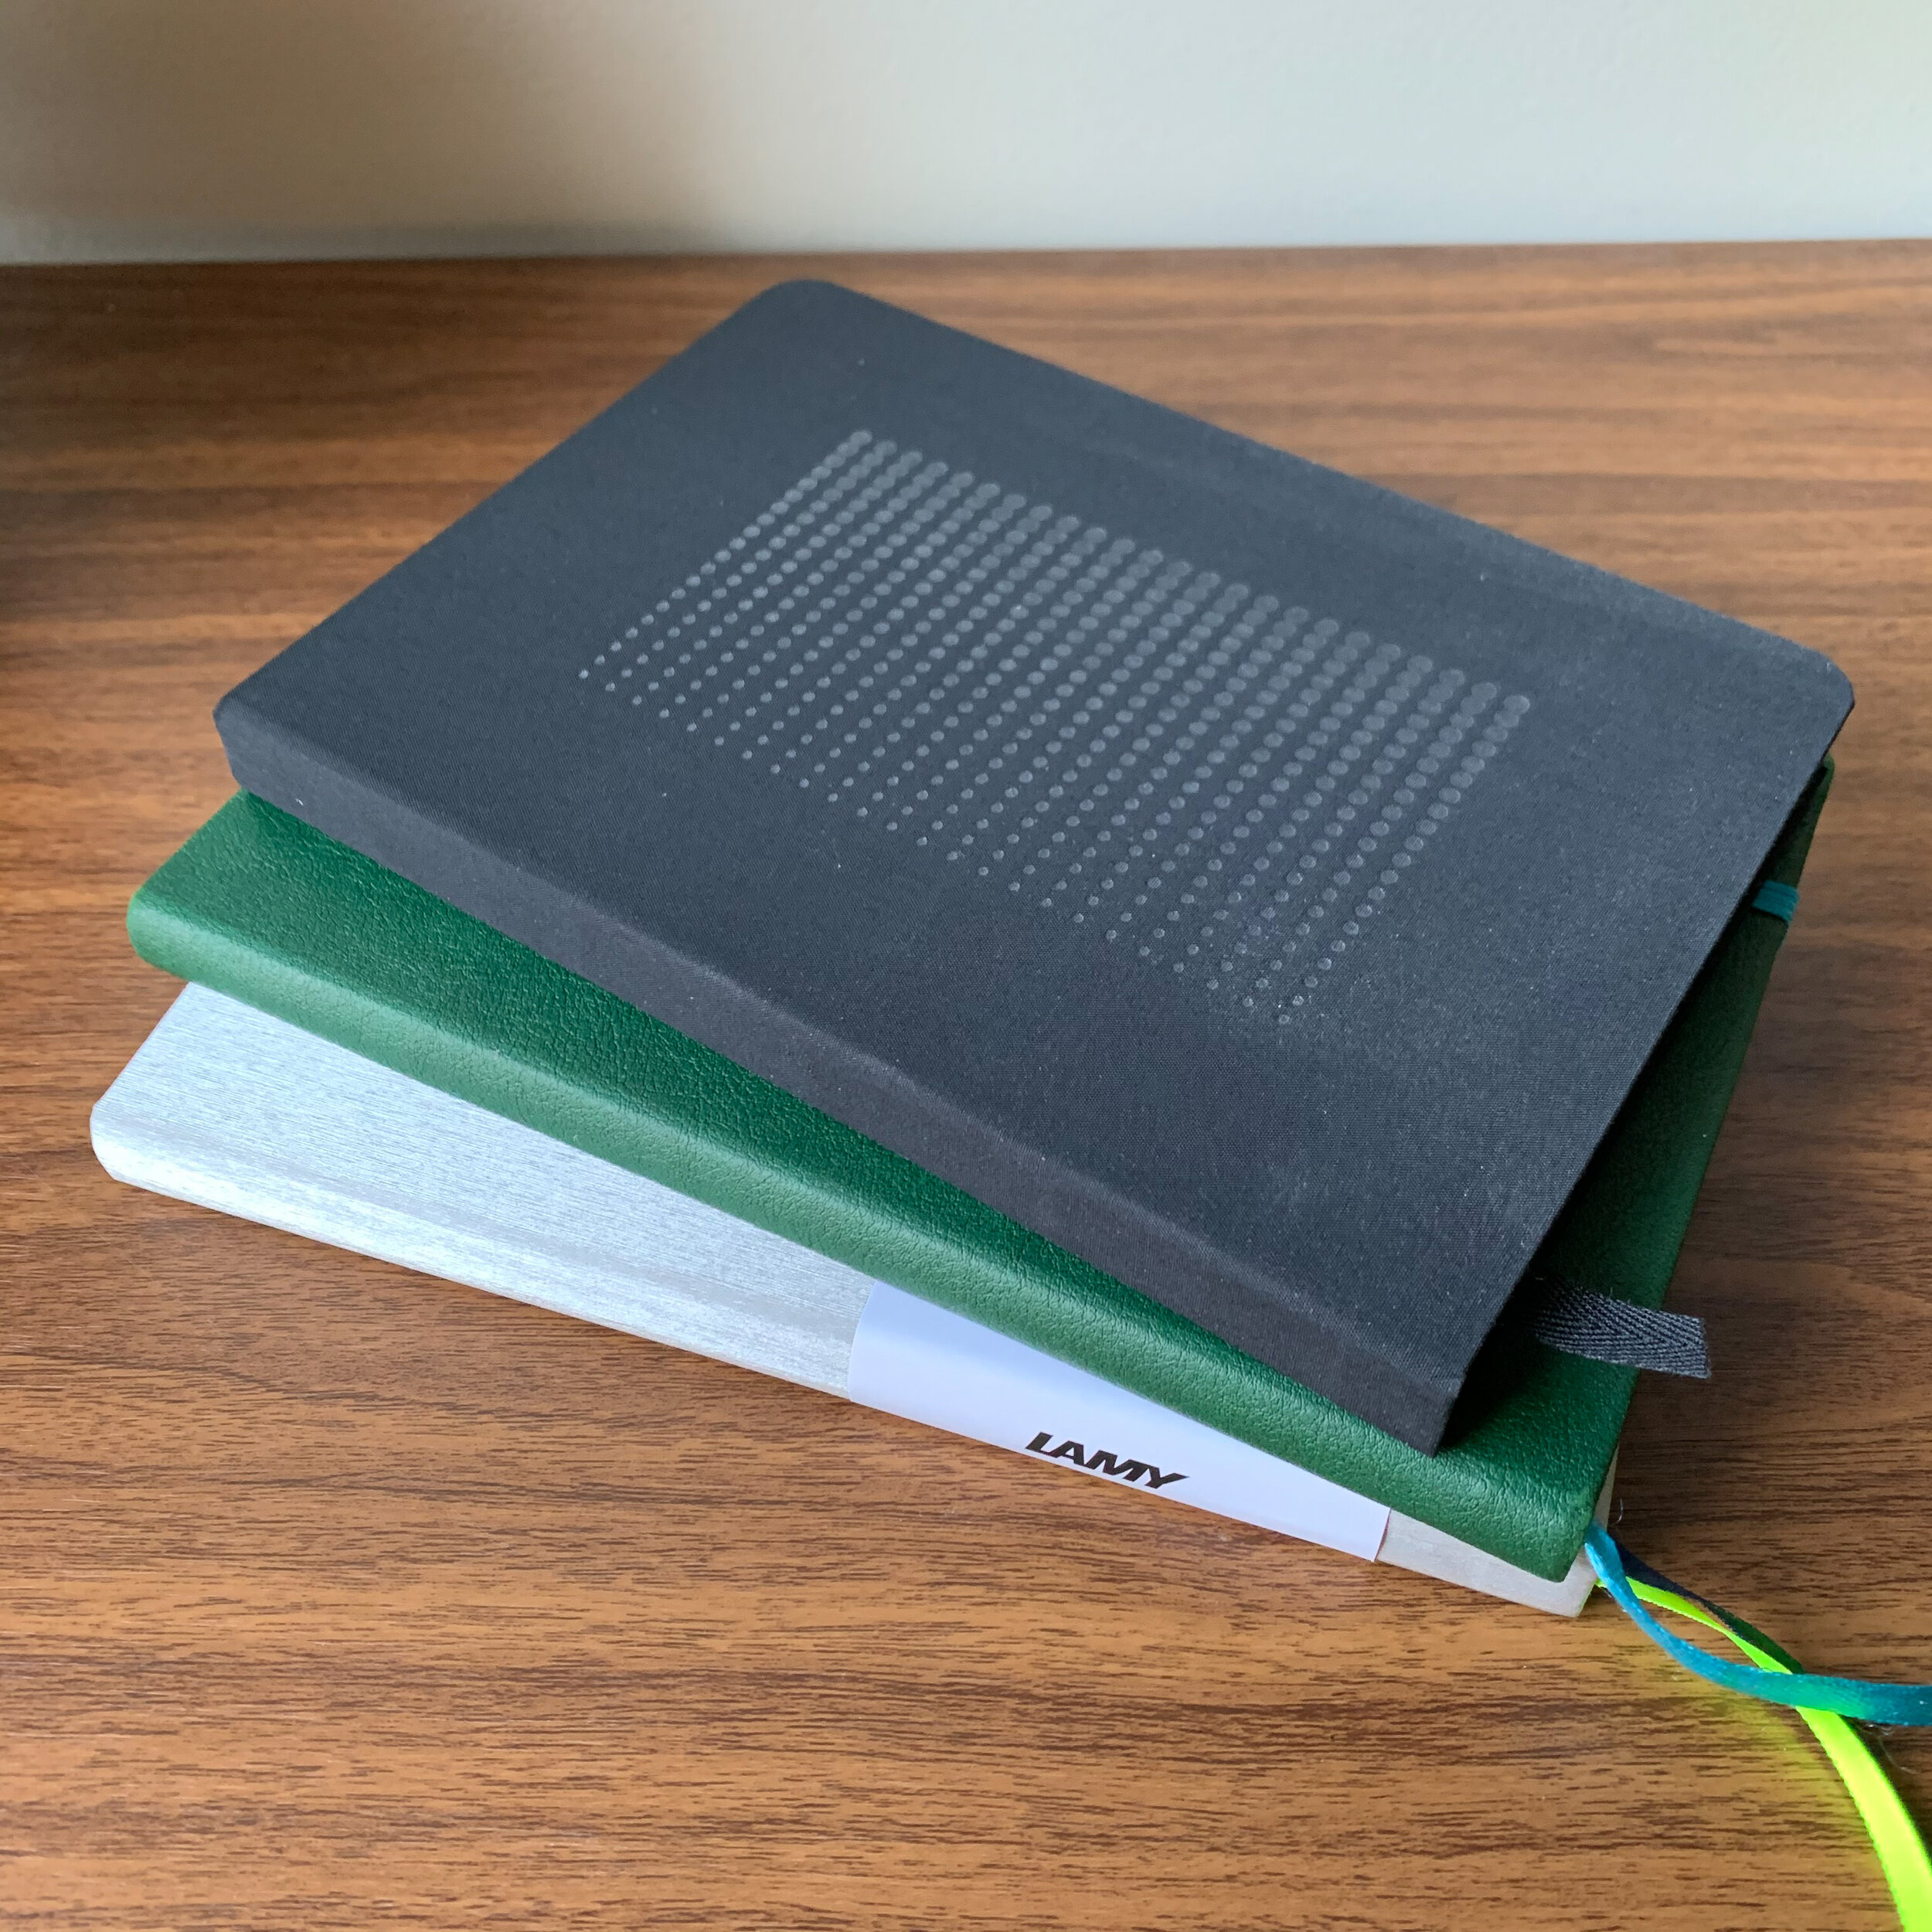 A5 Hardback Branded Moleskine Notebook